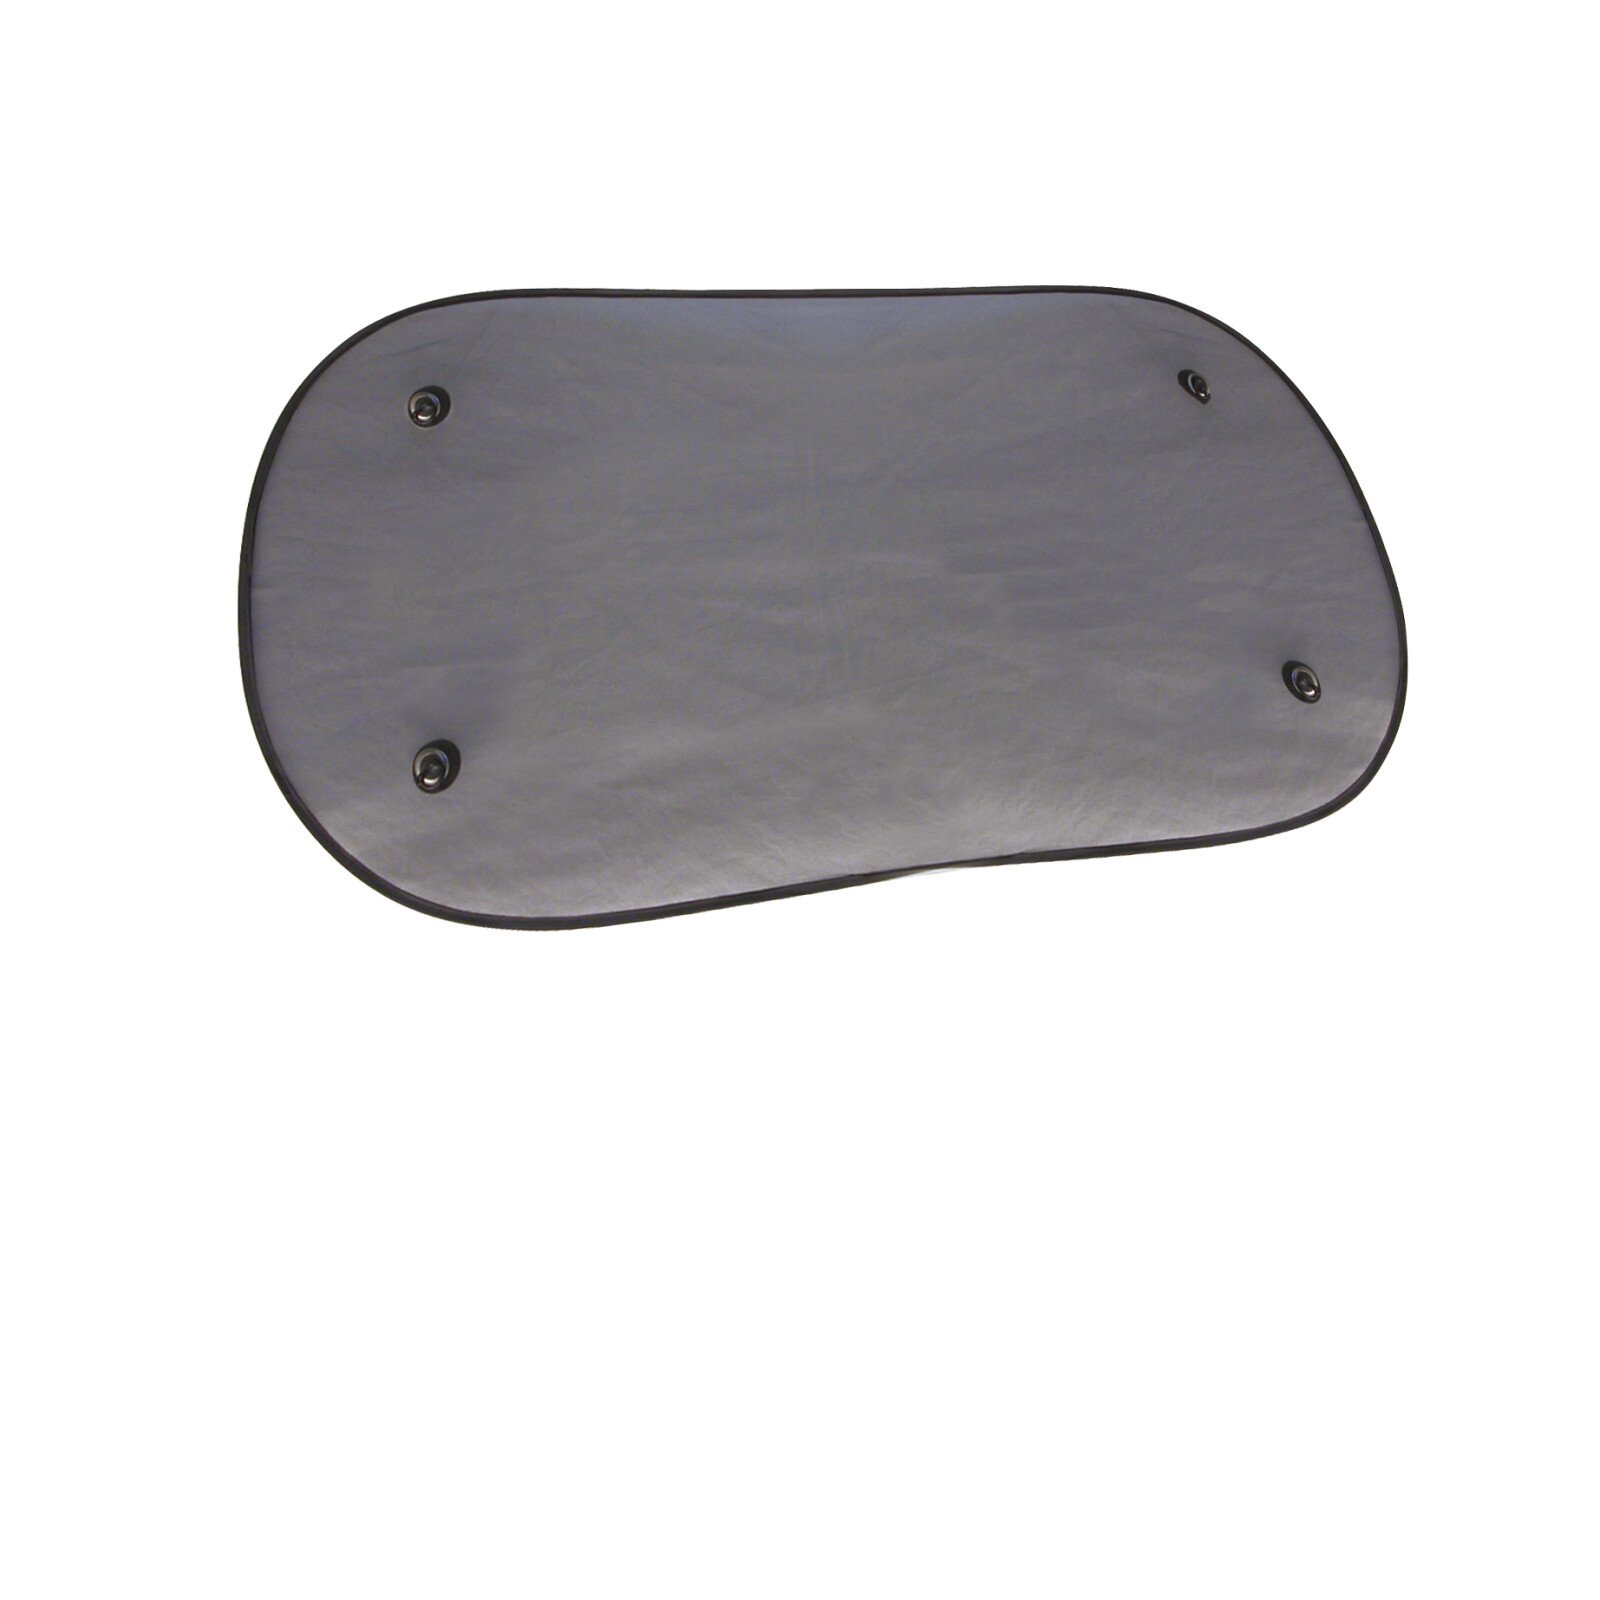 Carpoint universal rear sunshade - 50x100cm thumb